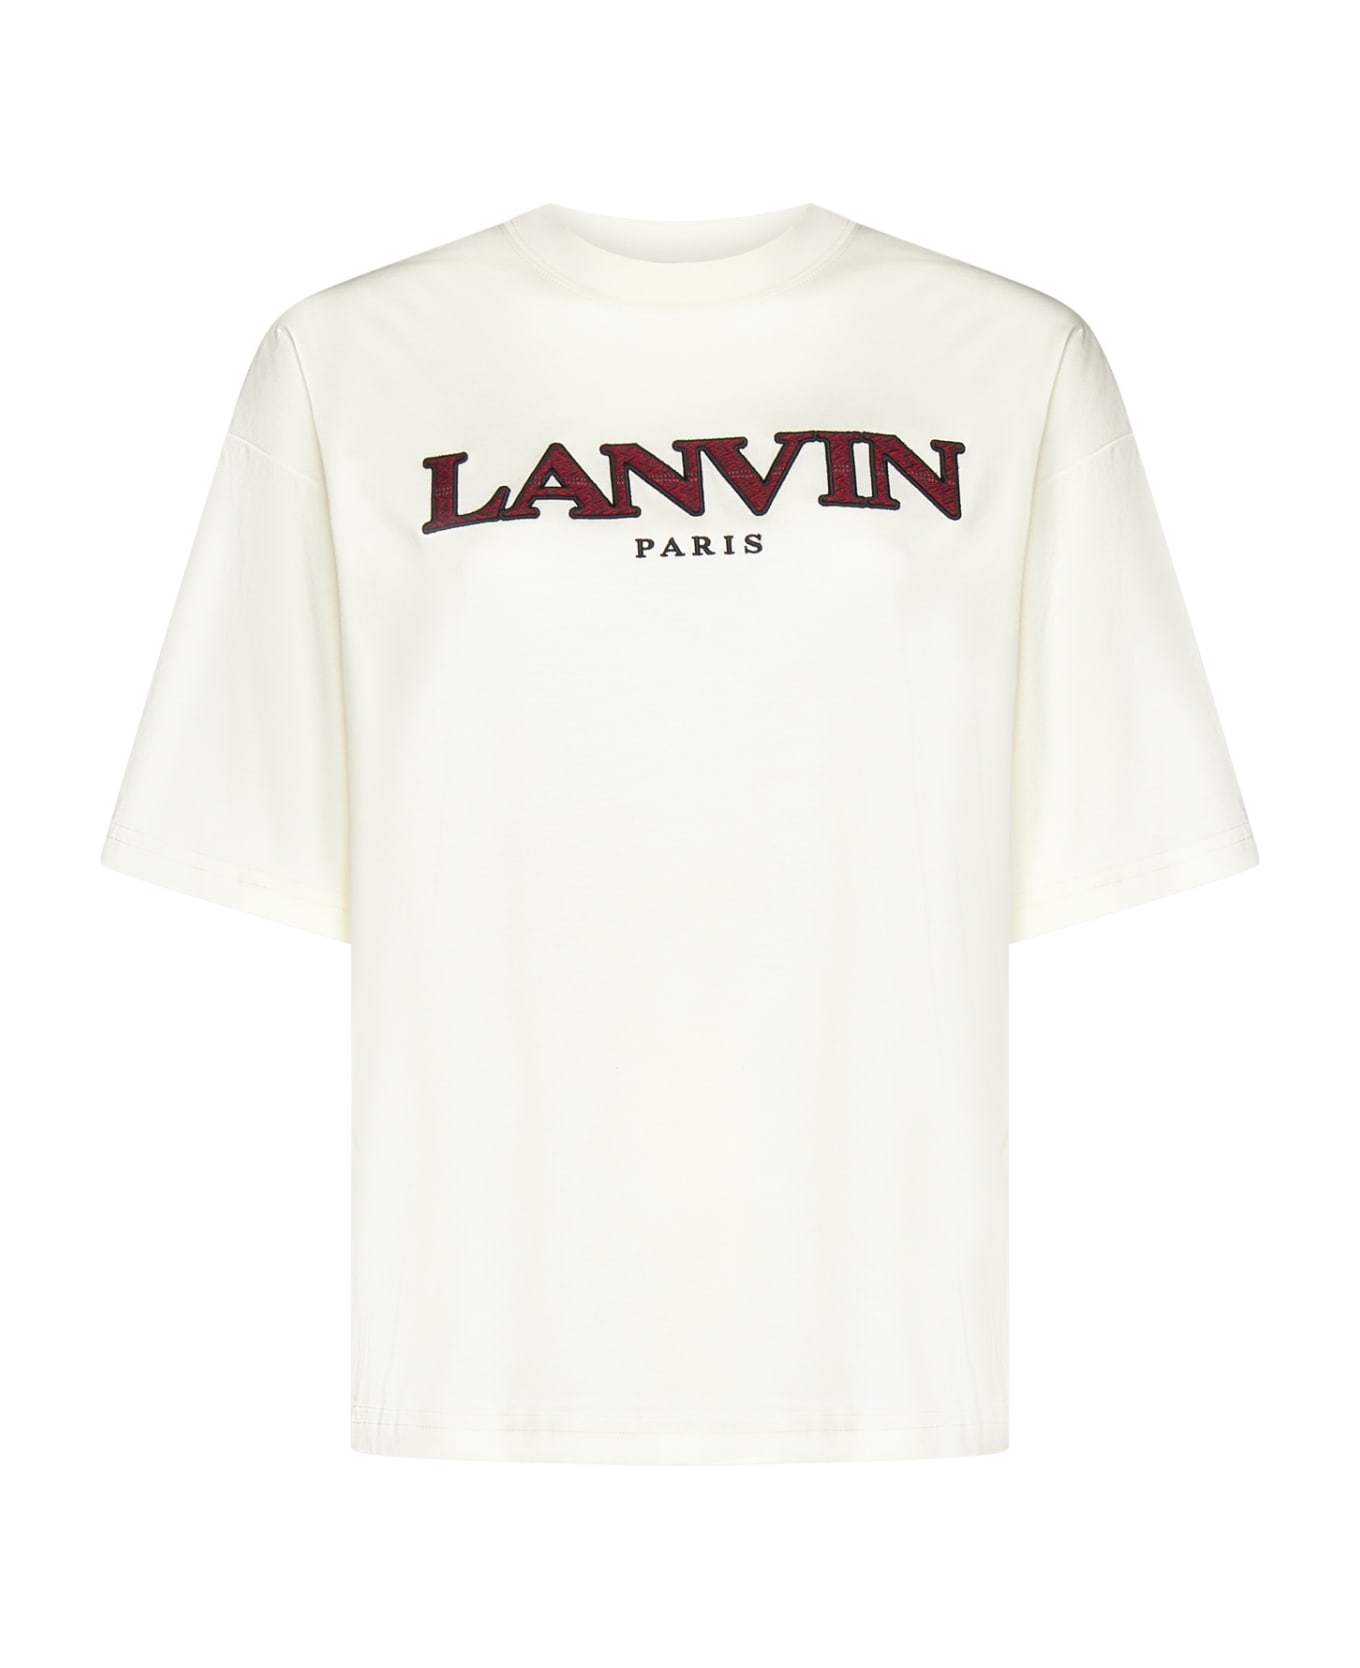 Lanvin T-Shirt - Cream